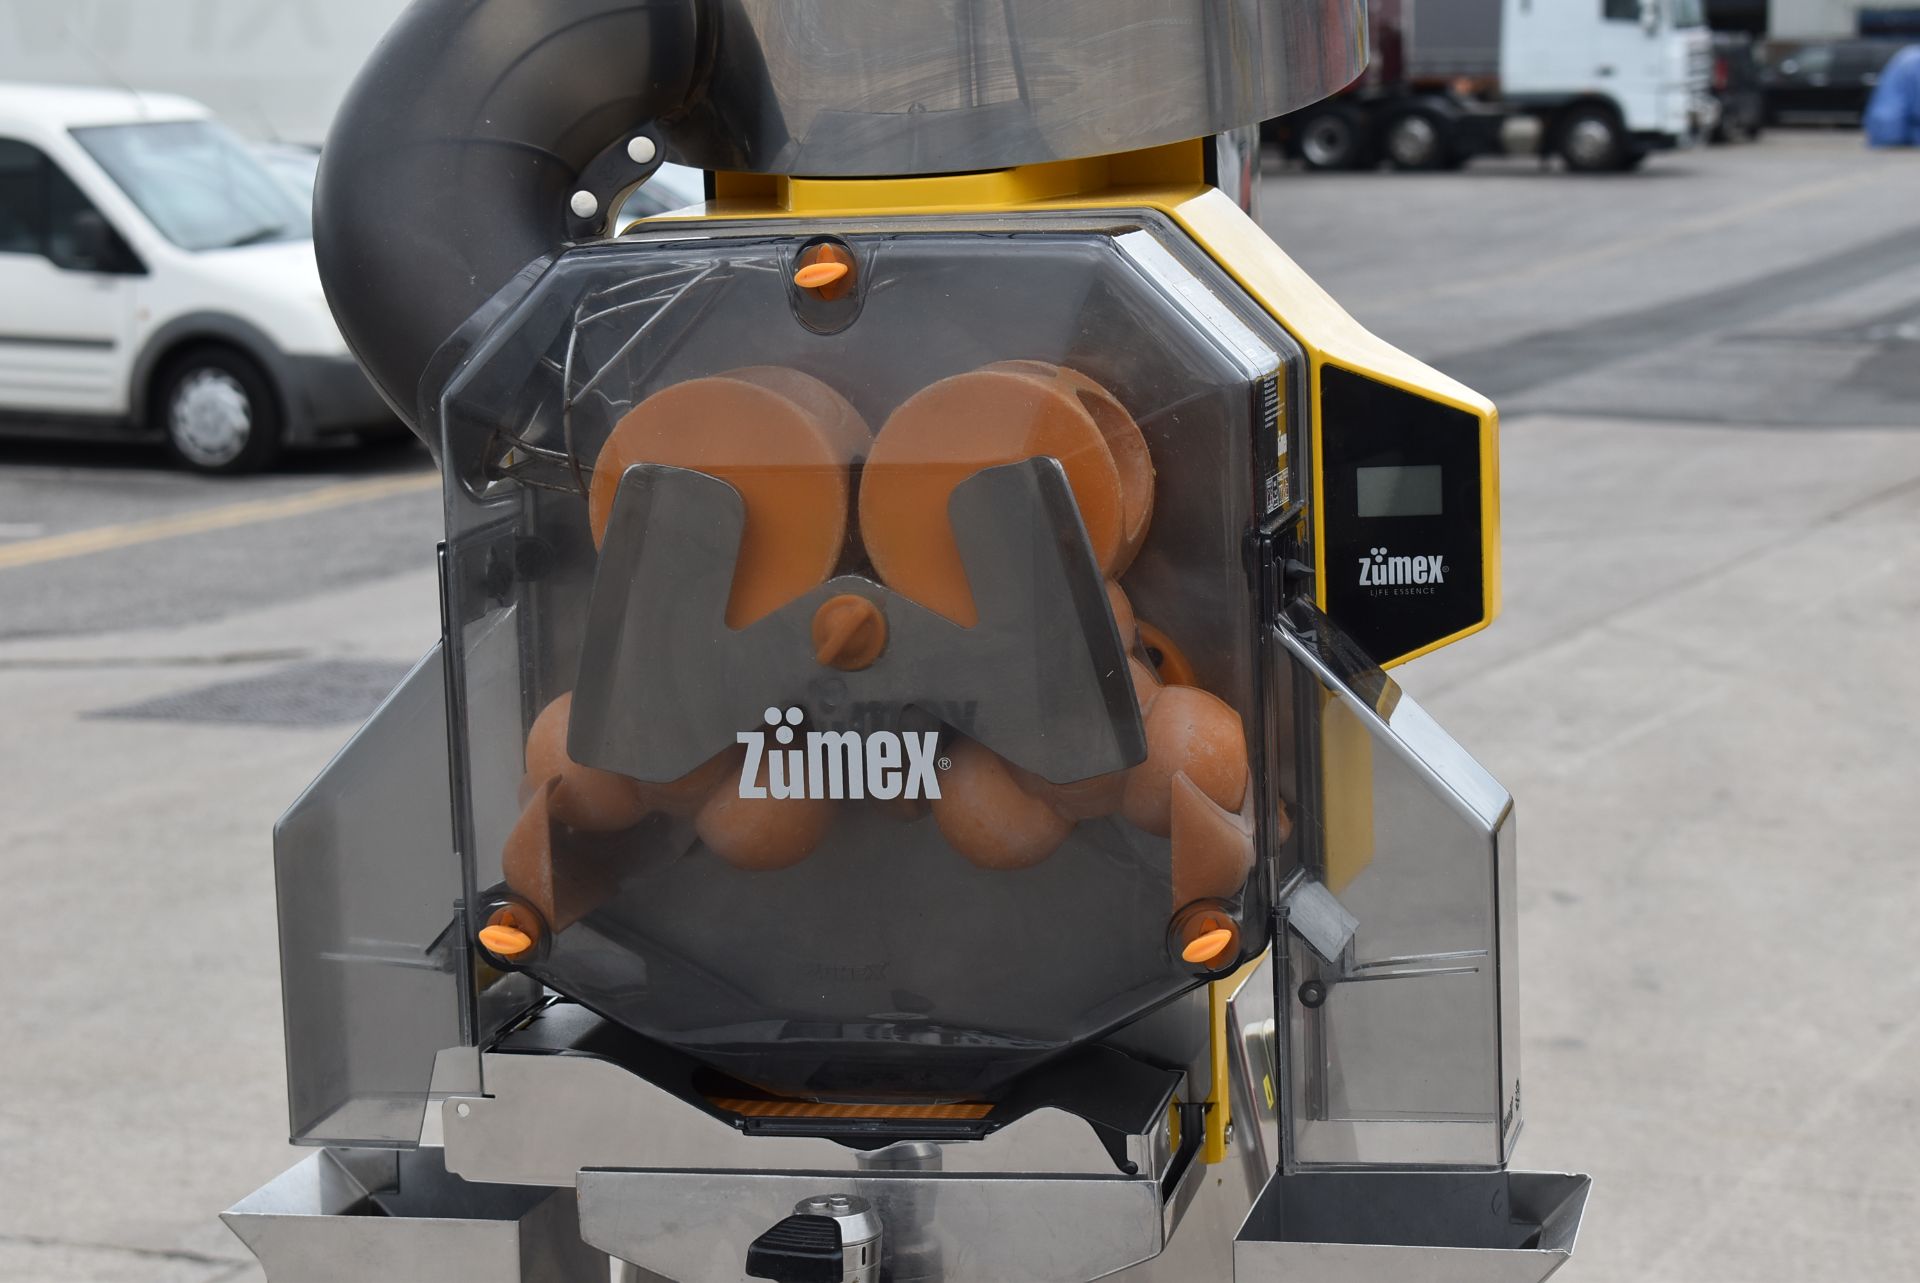 1 x Zumex Speed S +Plus Self-Service Podium Commercial Citrus Juicer - Manufactured in 2018 - - Image 3 of 5